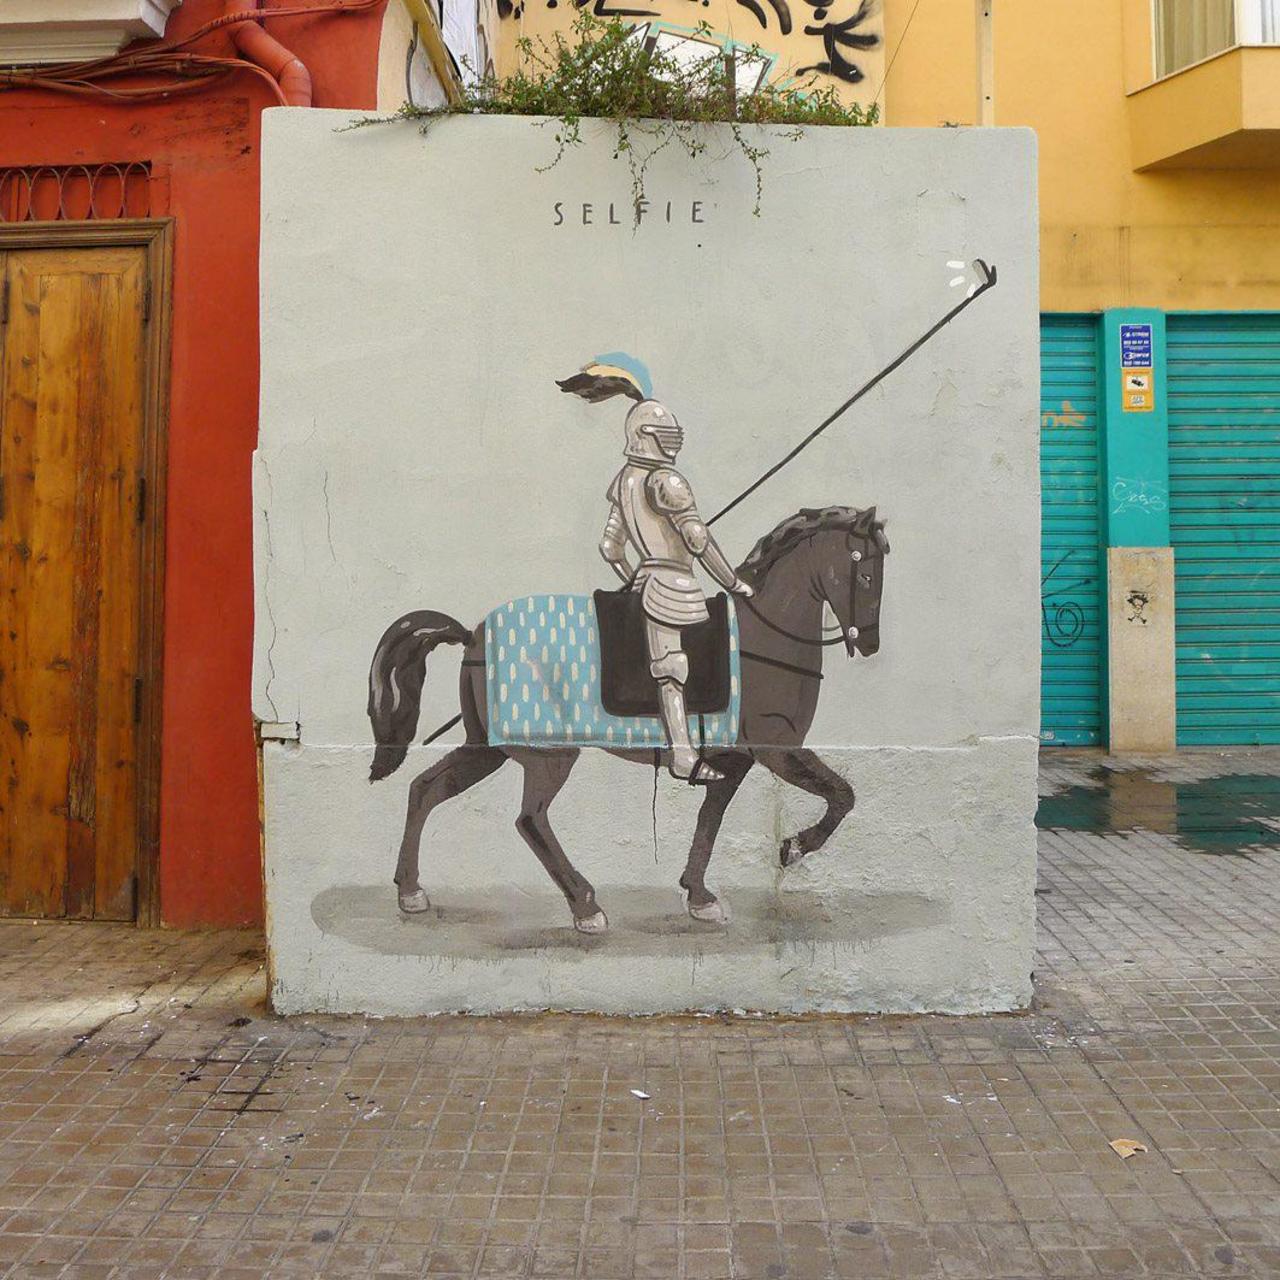 RT @allcitycanvas: This is what @escif_ 's selfie looks like in Valencia #Spain #mural #urbanart #streetart #graffiti http://t.co/32GeP9kNxW